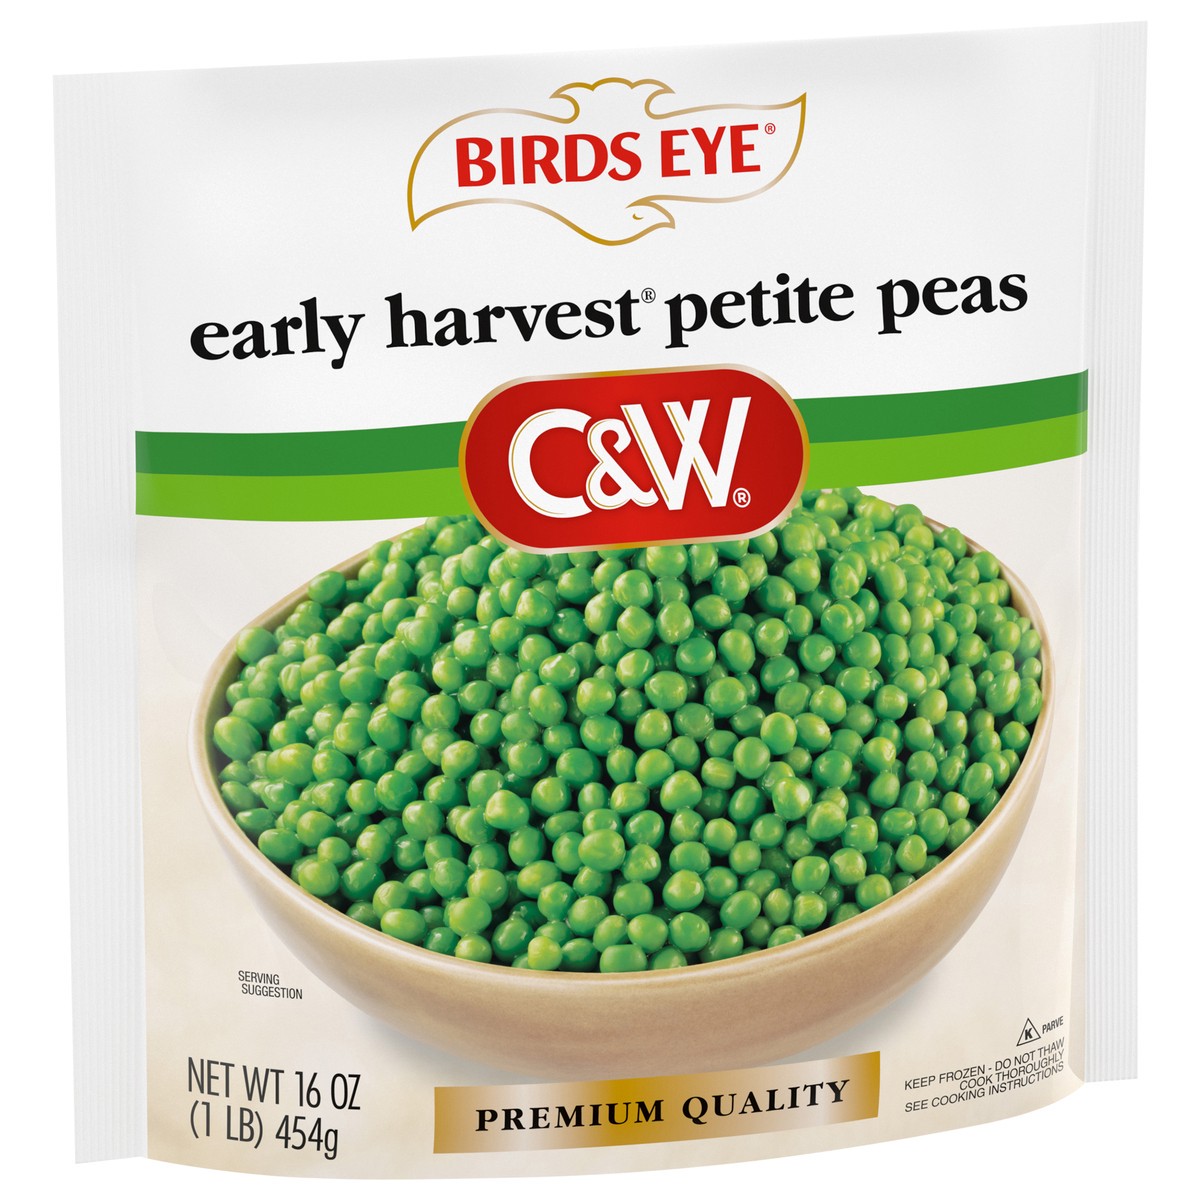 slide 6 of 12, Birds Eye C&W Premium Quality Early Harvest Petite Peas 16 oz, 16 oz